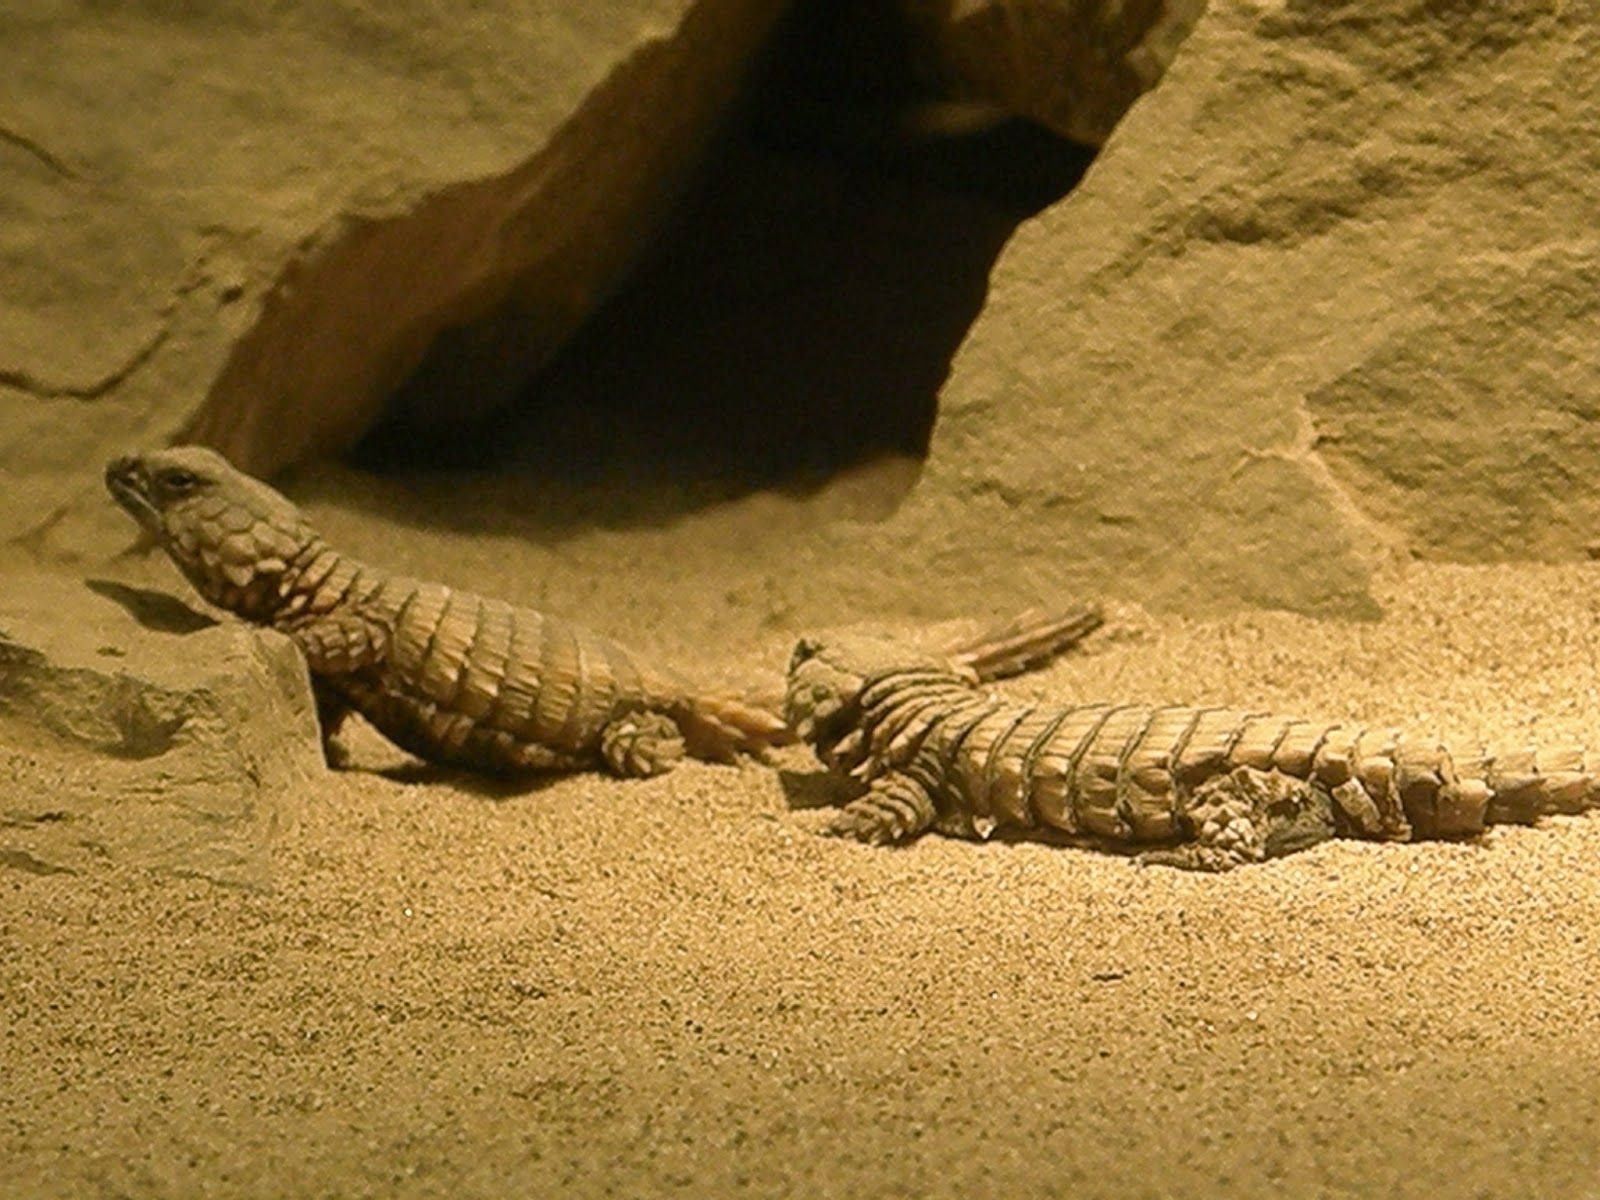 Armadillo Lizards look like Baby Dragons